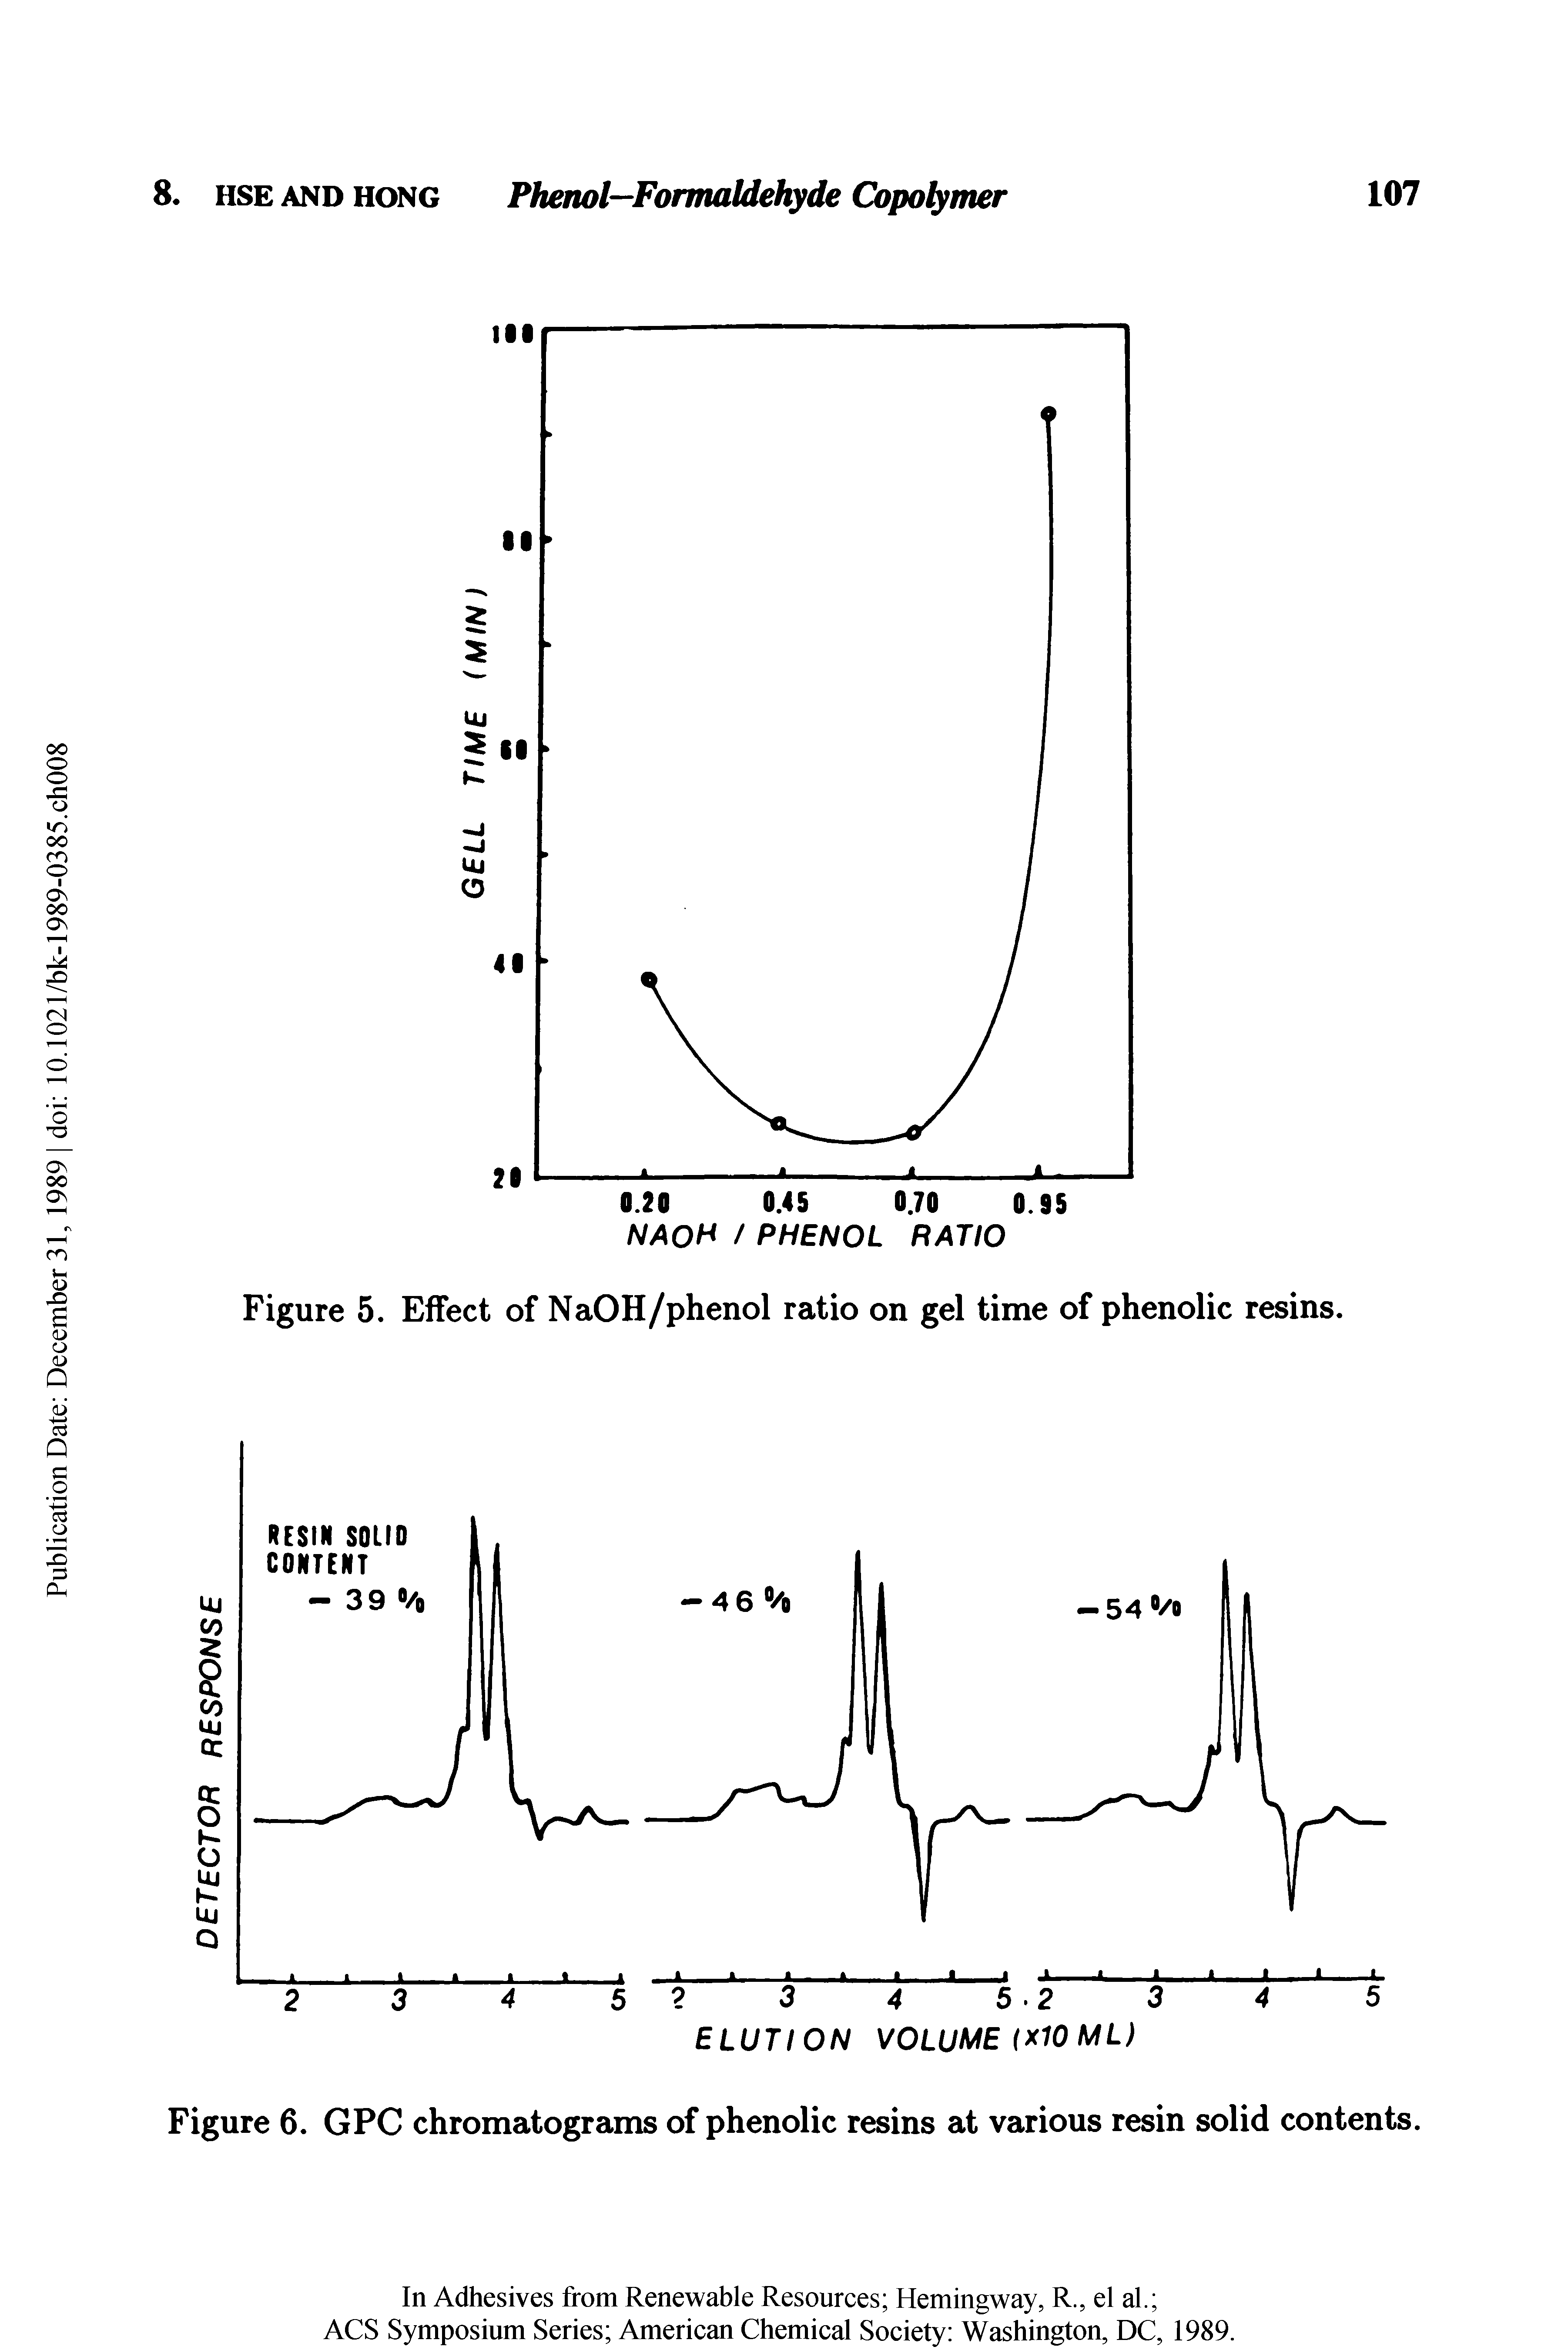 Figure 5. Effect of NaOH/phenol ratio on gel time of phenolic resins.